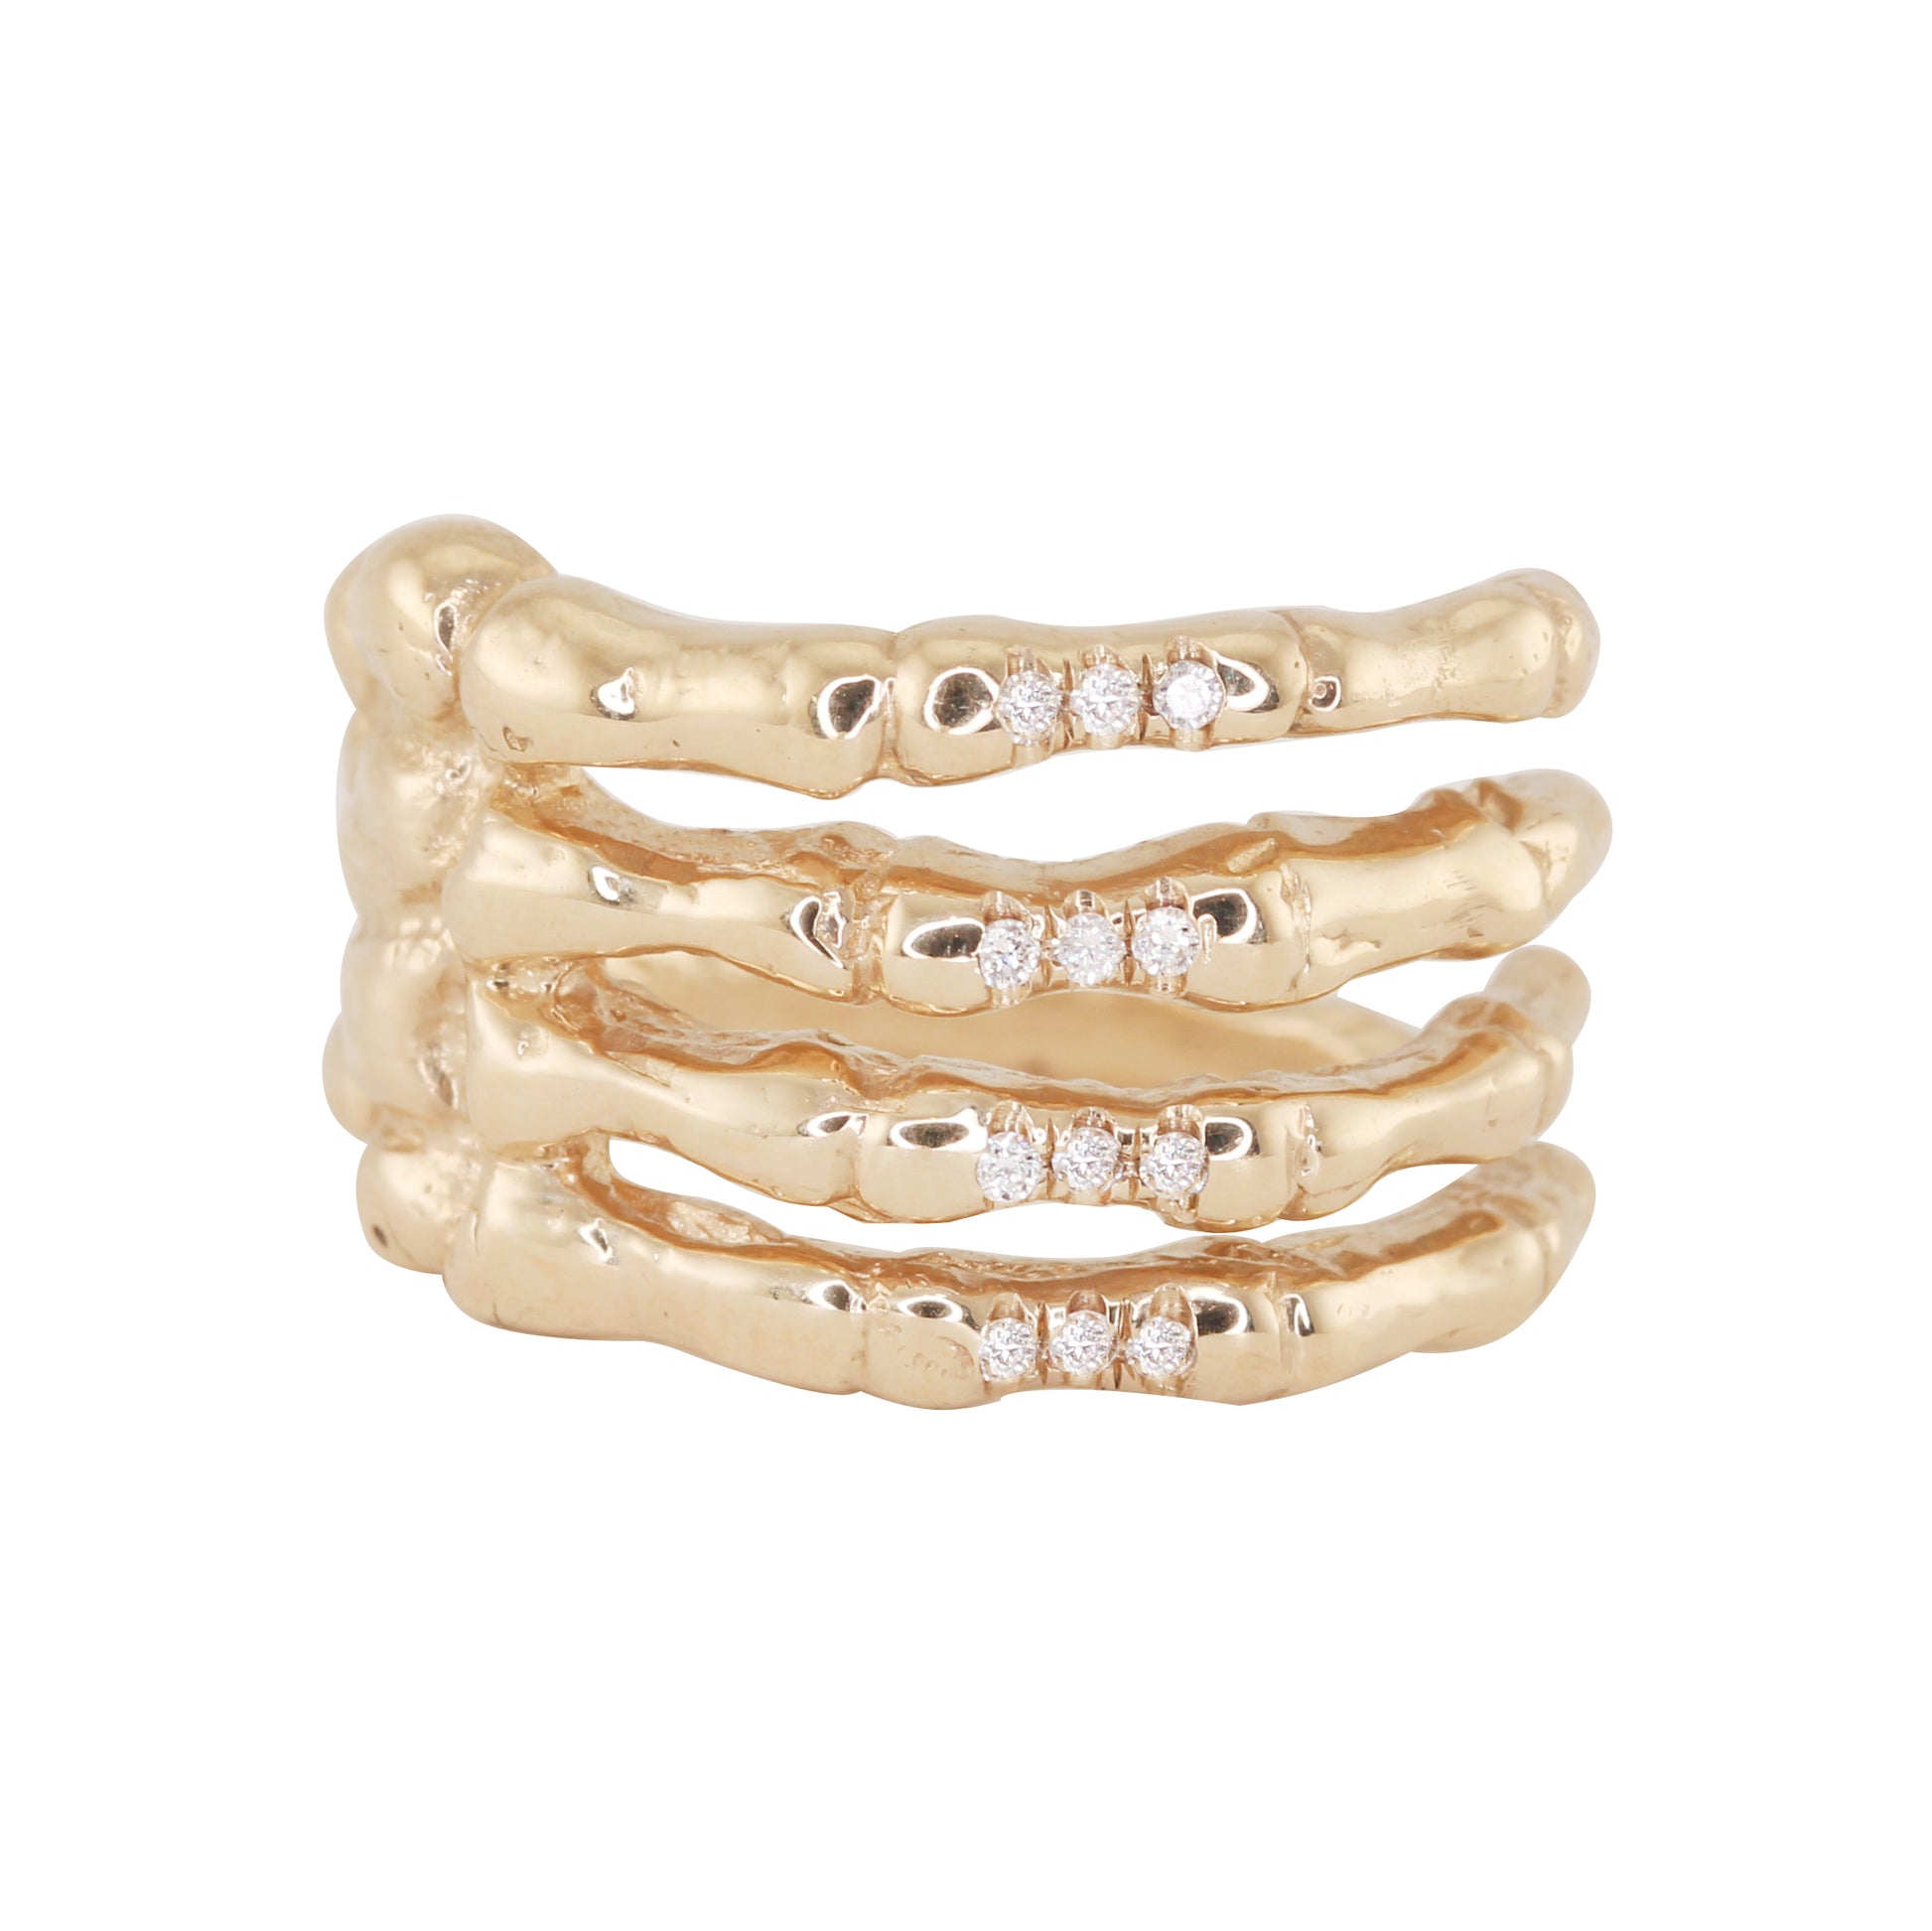 14kt gold and diamond skeleton hand ring - Luna Skye